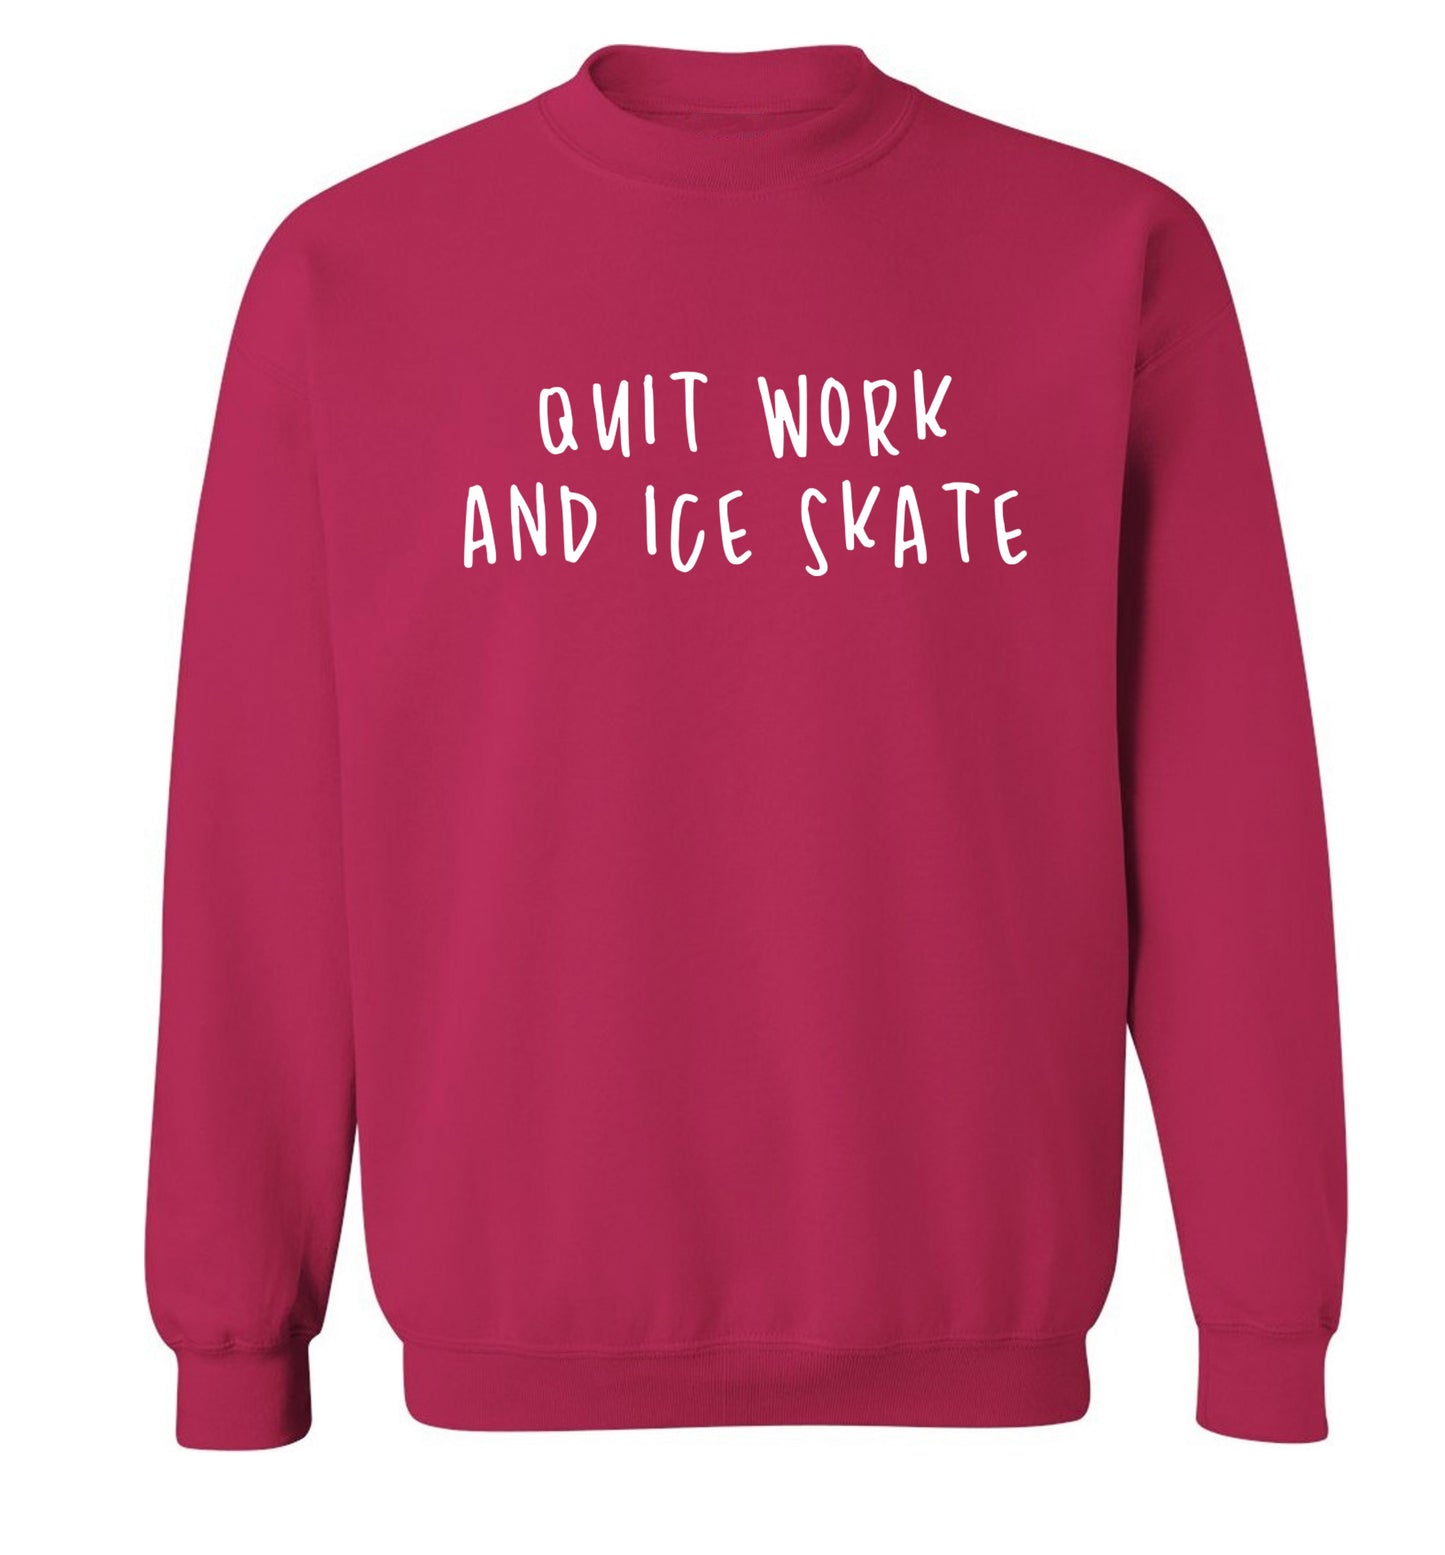 Quit work ice skate Adult's unisexpink Sweater 2XL